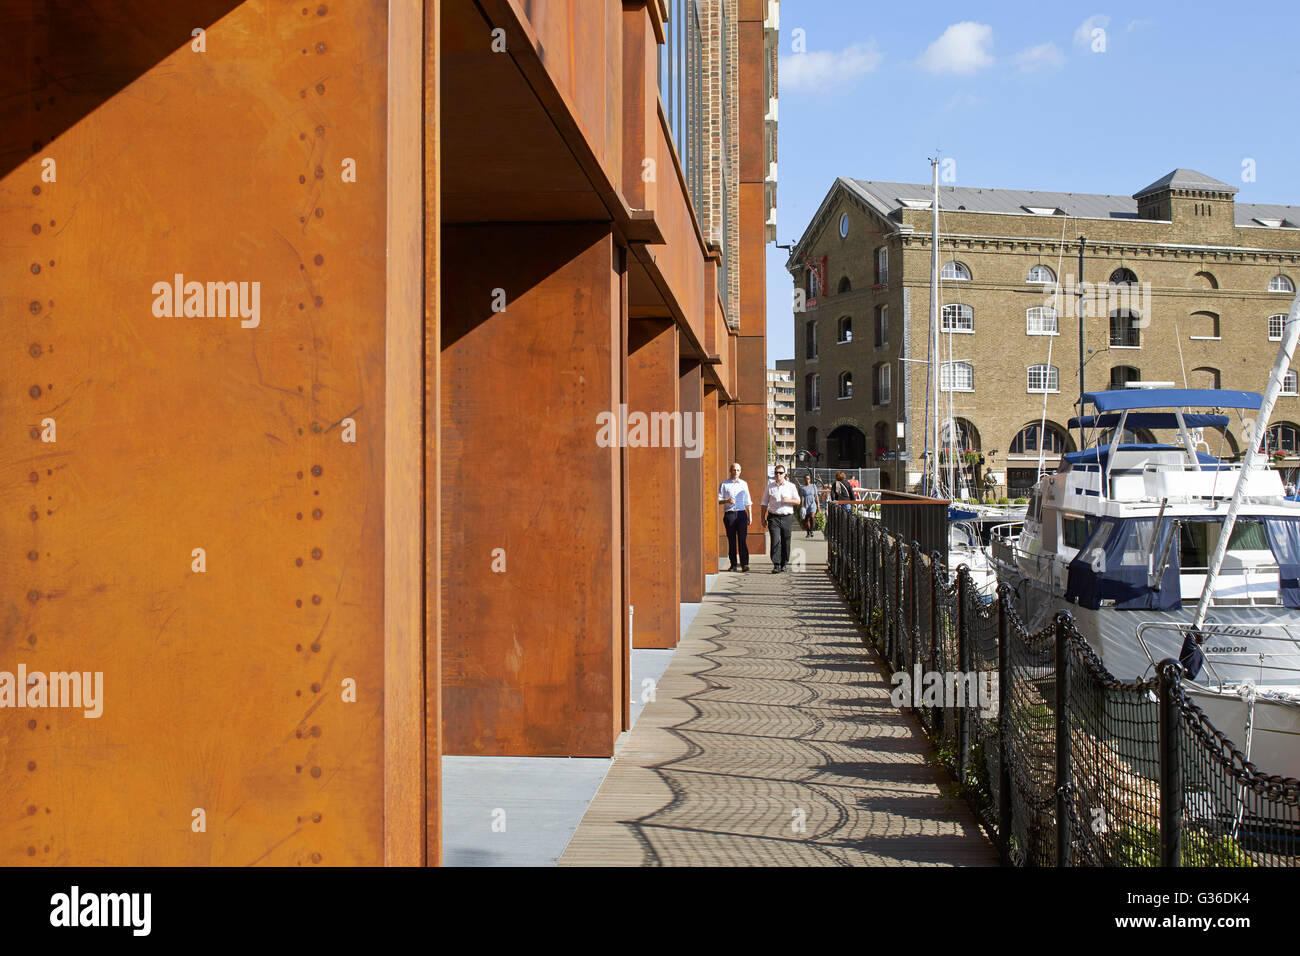 Corten steel cladding of colonnade. Commodity Quay, London, United Kingdom. Architect: BuckleyGrayYeoman, 2014. Stock Photo